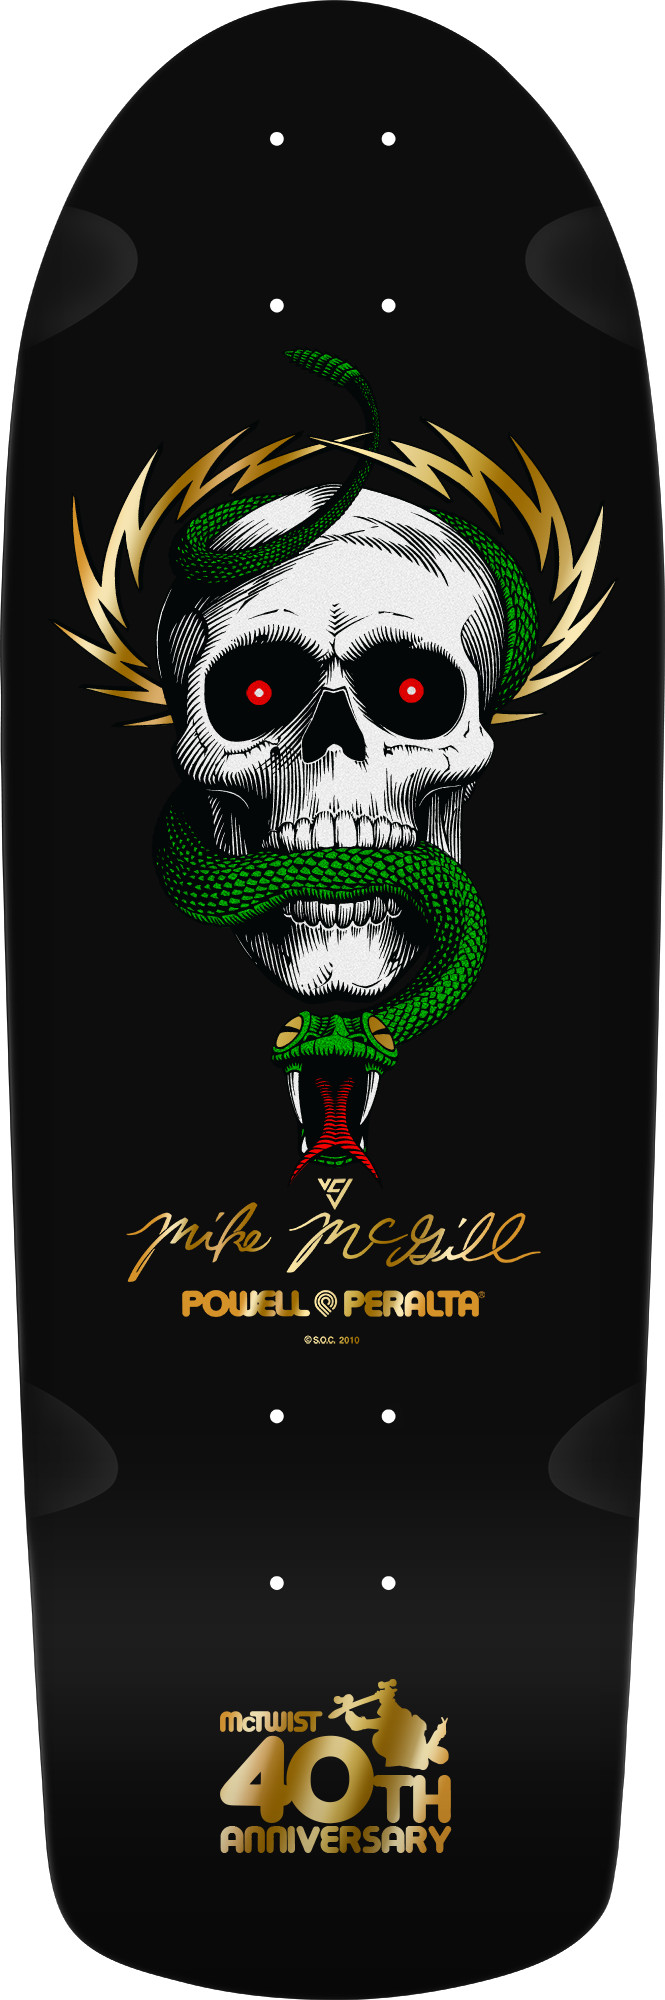 **PRE ORDER** Powell Peralta Mike McGill Skull & Snake McTwist 40th Ann.  Skateboard Deck Gold Foil/Blk - 10 x 30.125